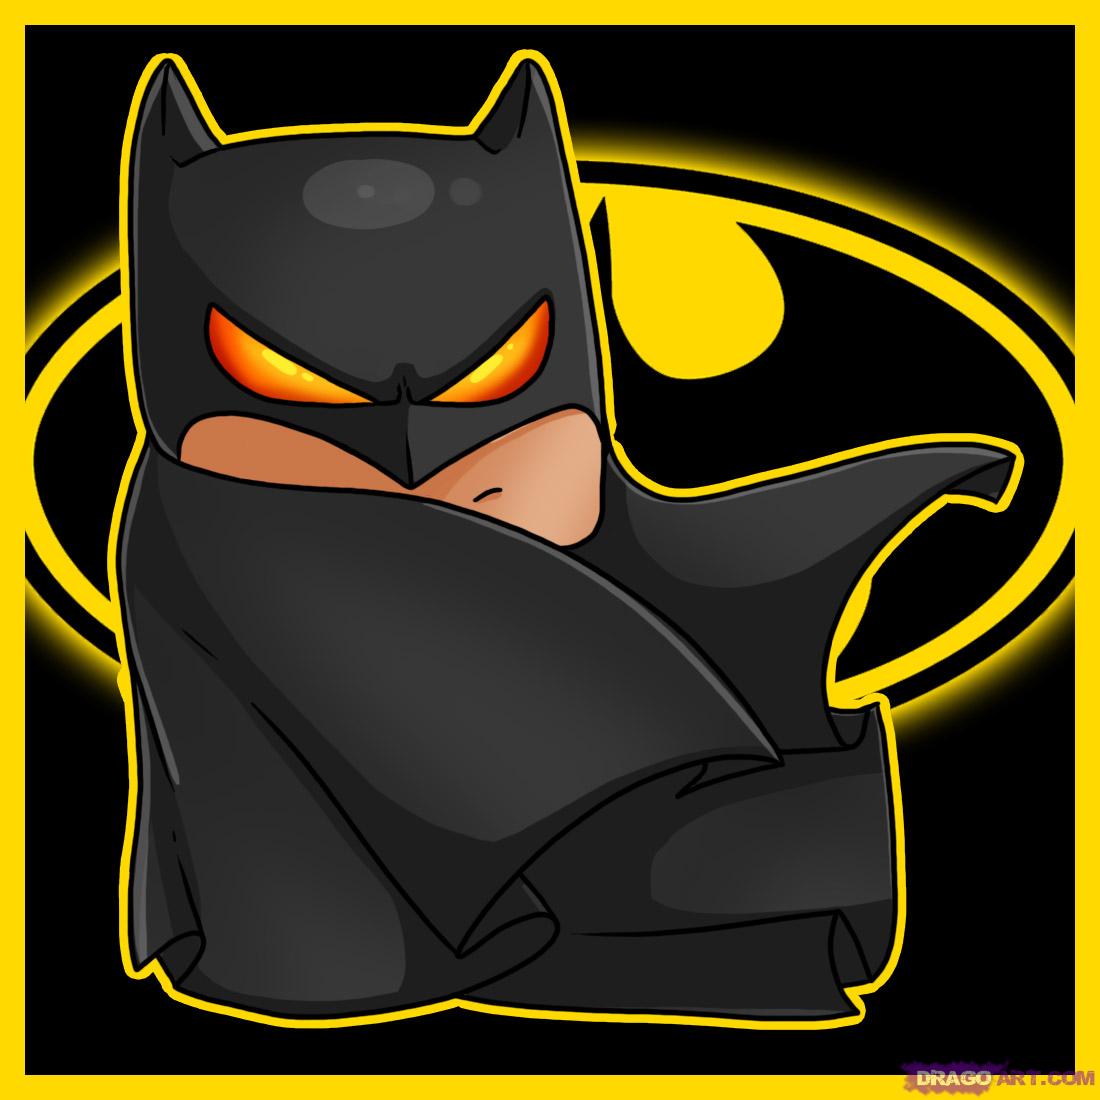 Chibi Bat Logo - How to Draw Chibi Batman | Shijufasu's Blog